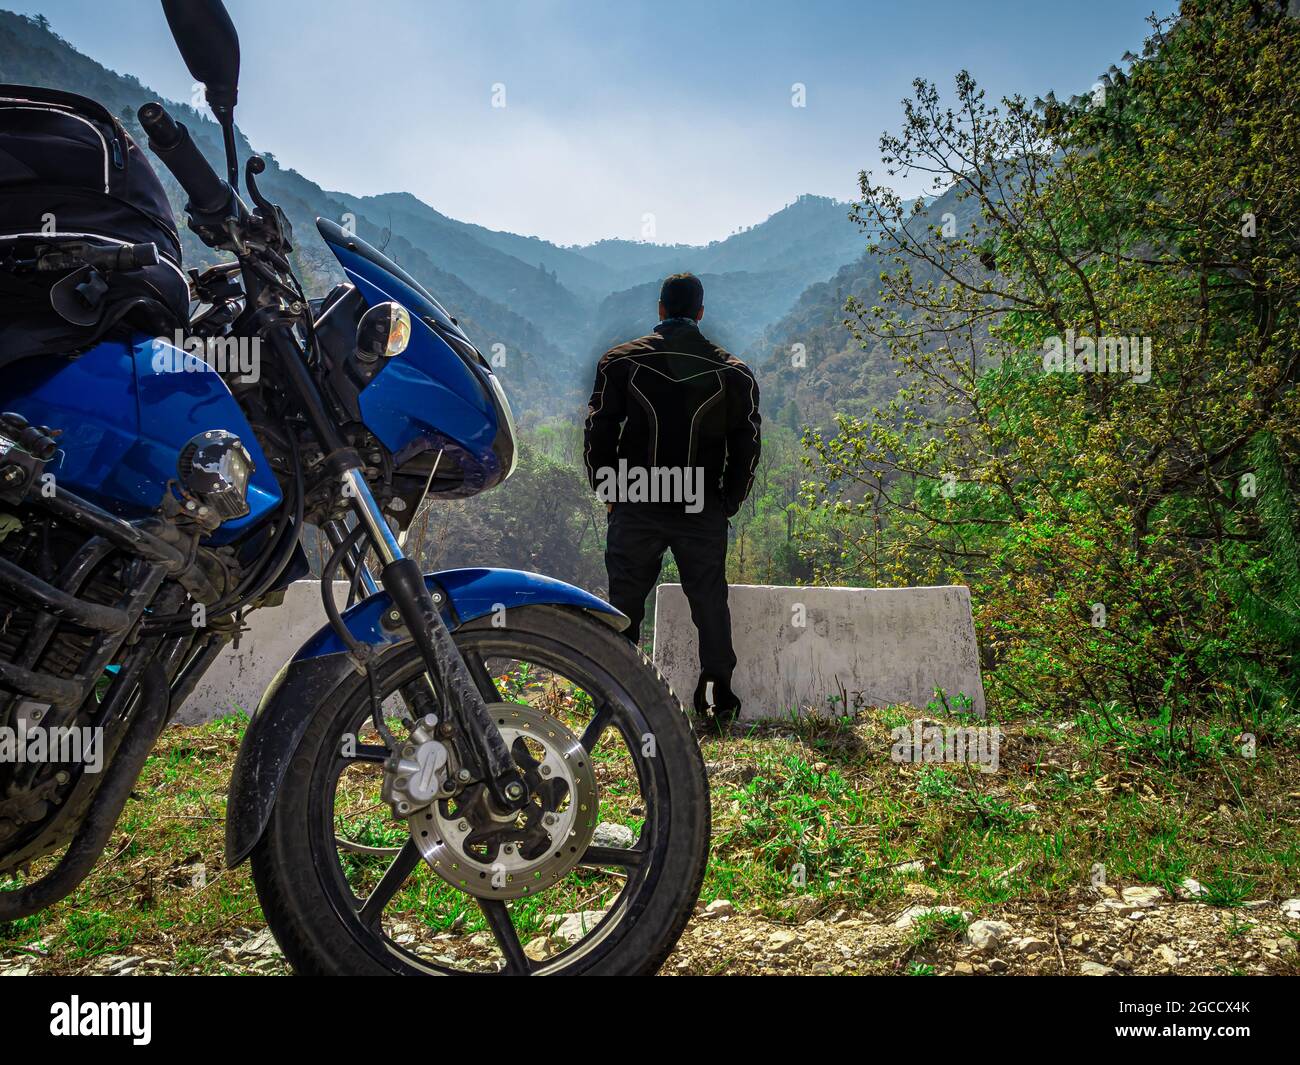 man motorcyclist with his motorcycle and beautiful natural view at morning image is taken at shergaon arunachal pradesh india. Stock Photo